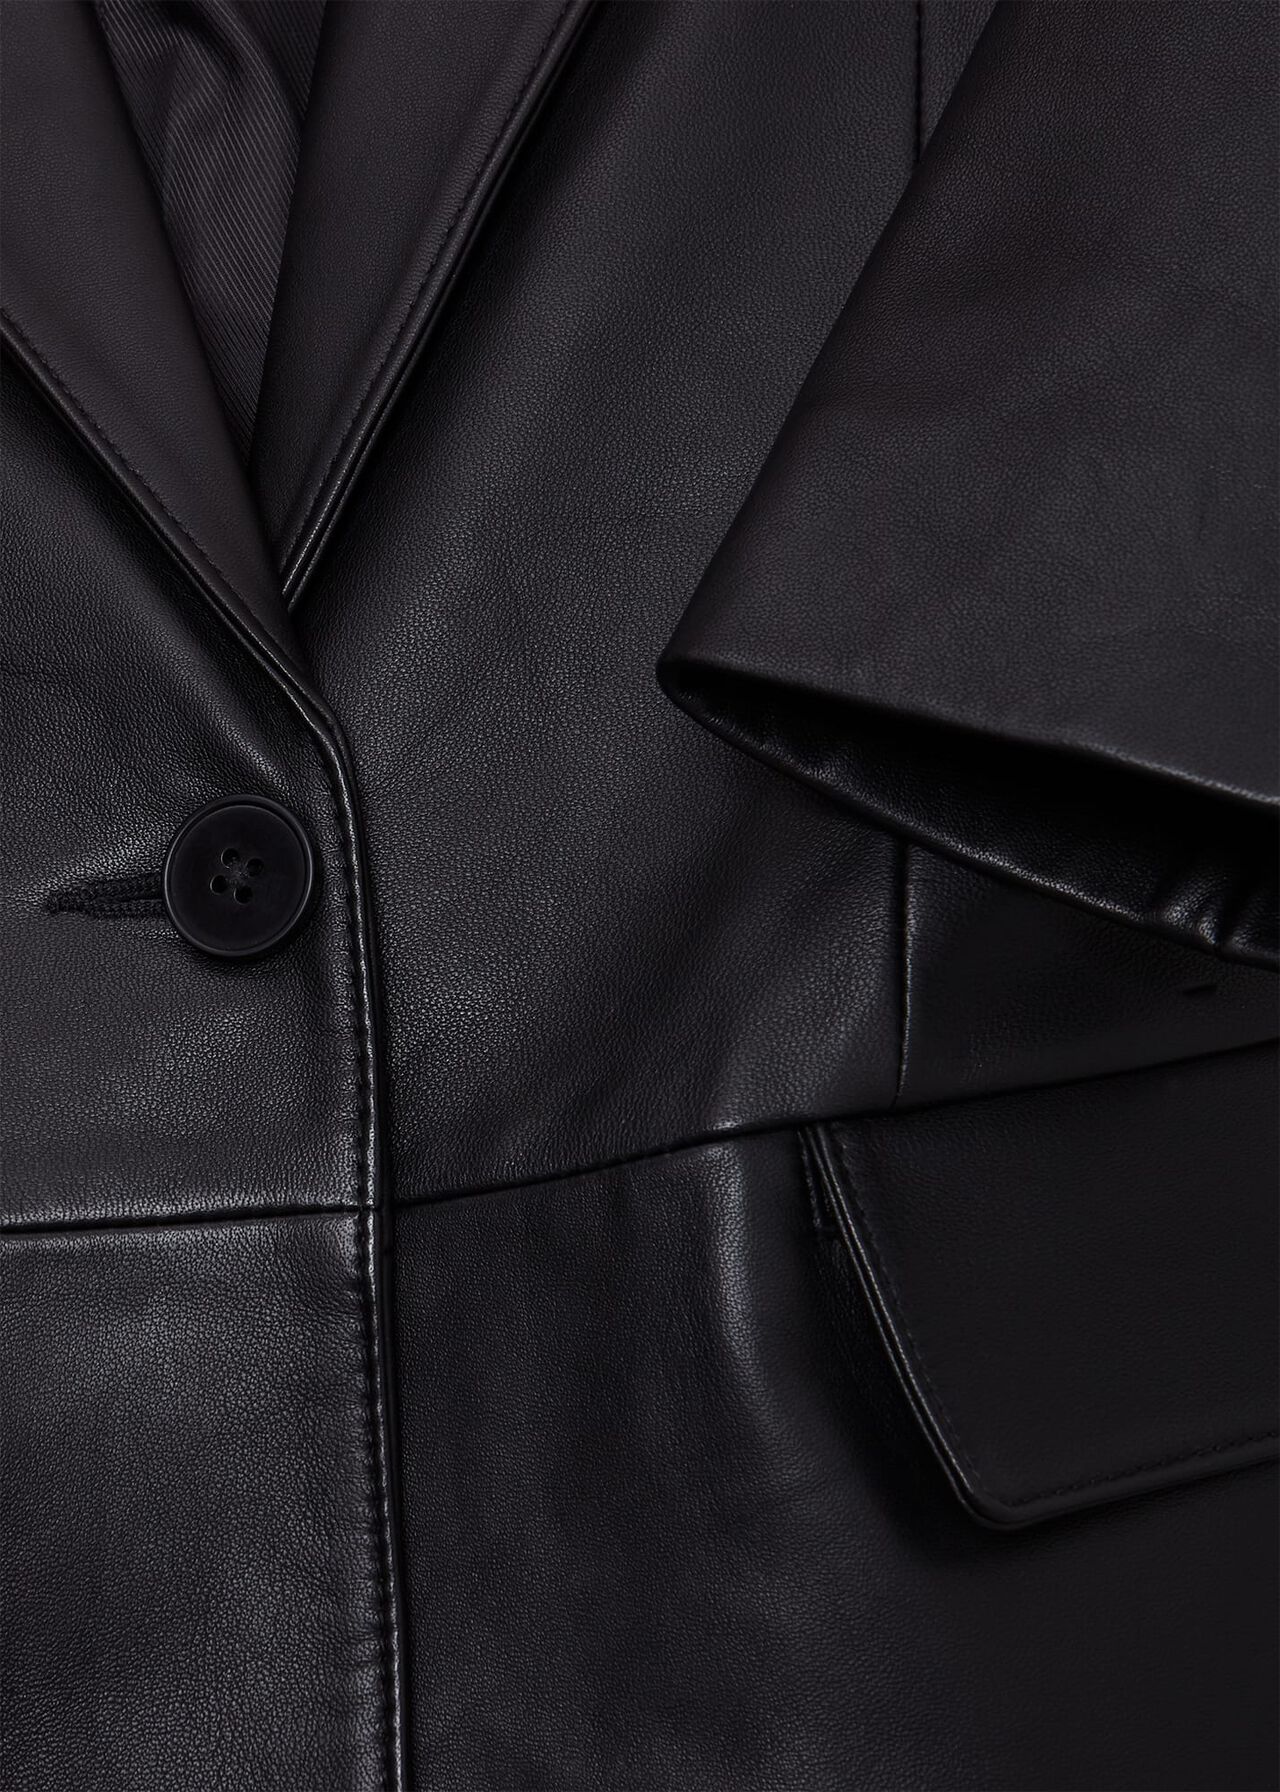 Merissa Leather Blazer, Black, hi-res